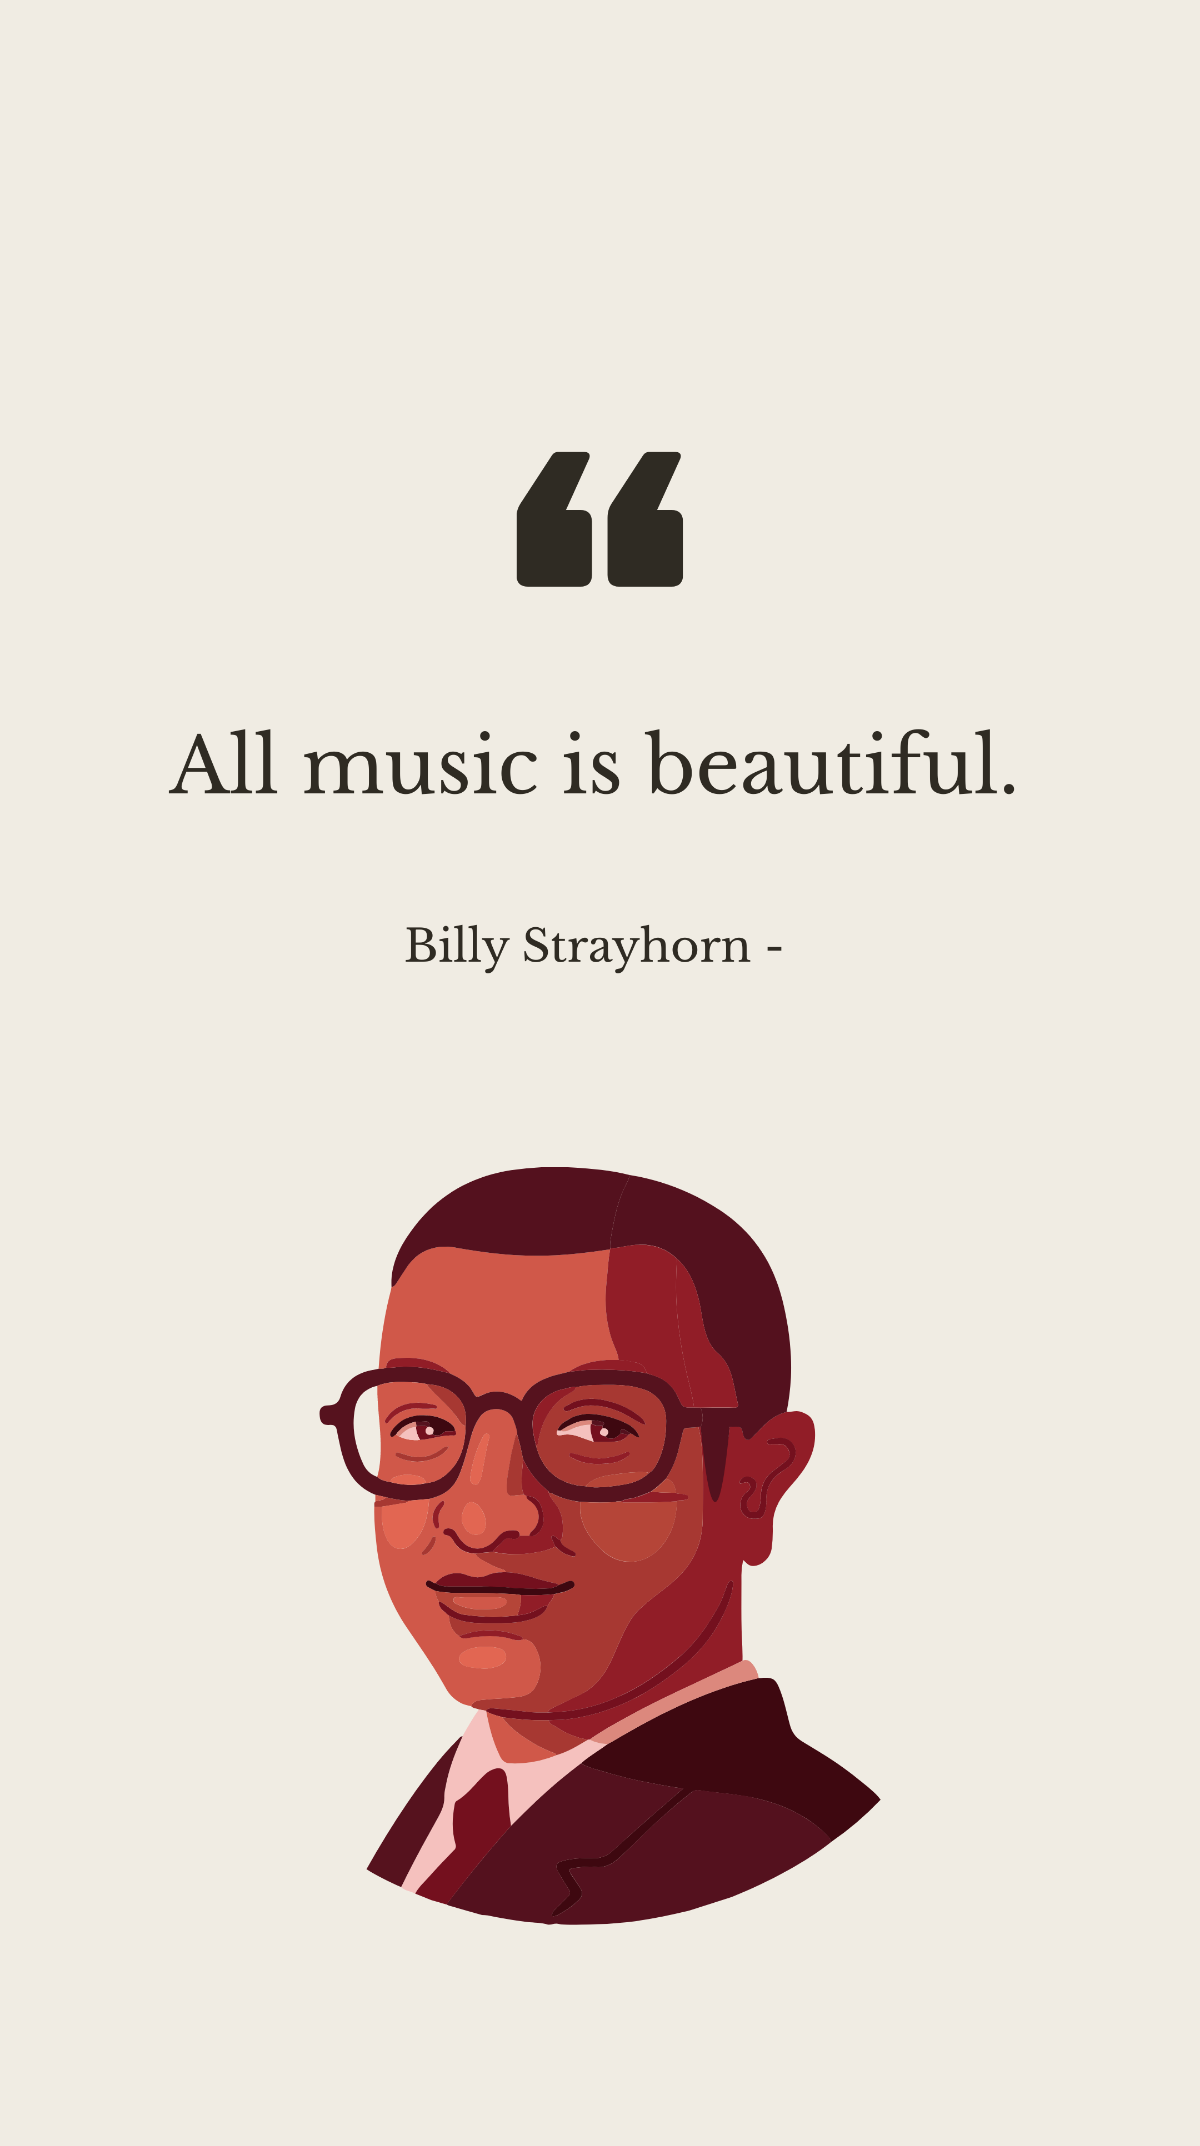 Billy Strayhorn - All music is beautiful.